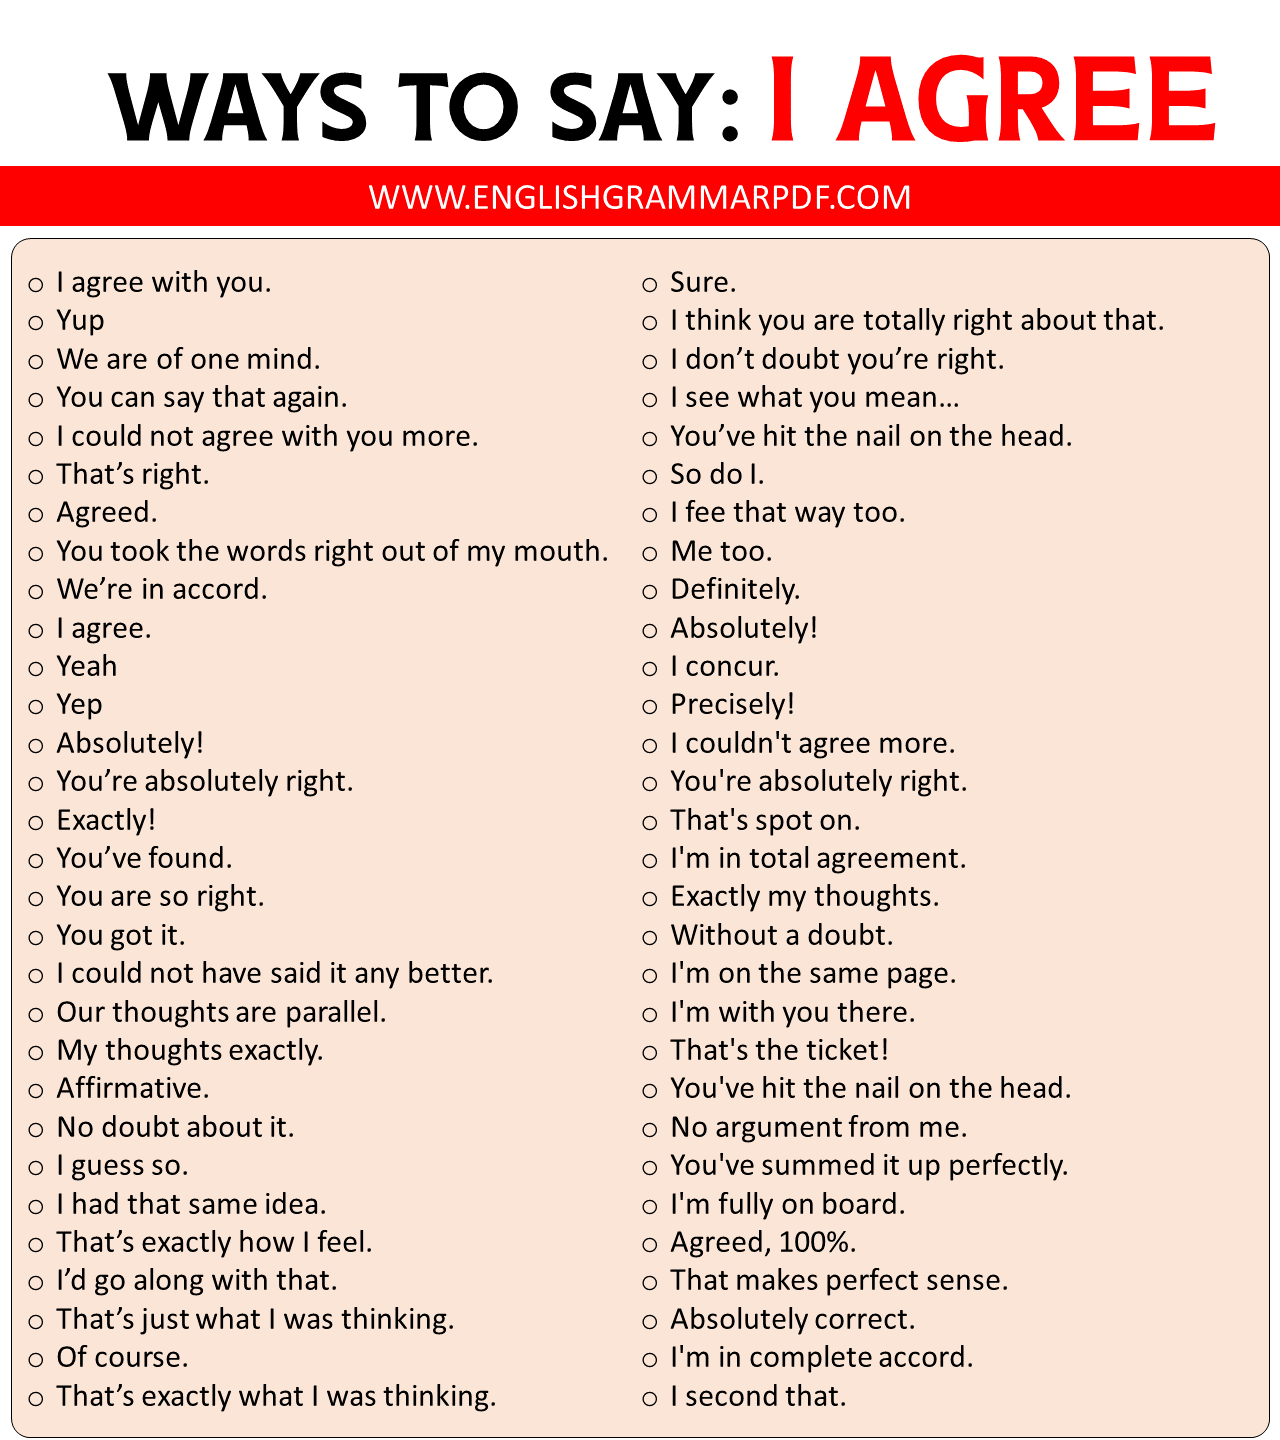 Ways to Say I AGREE